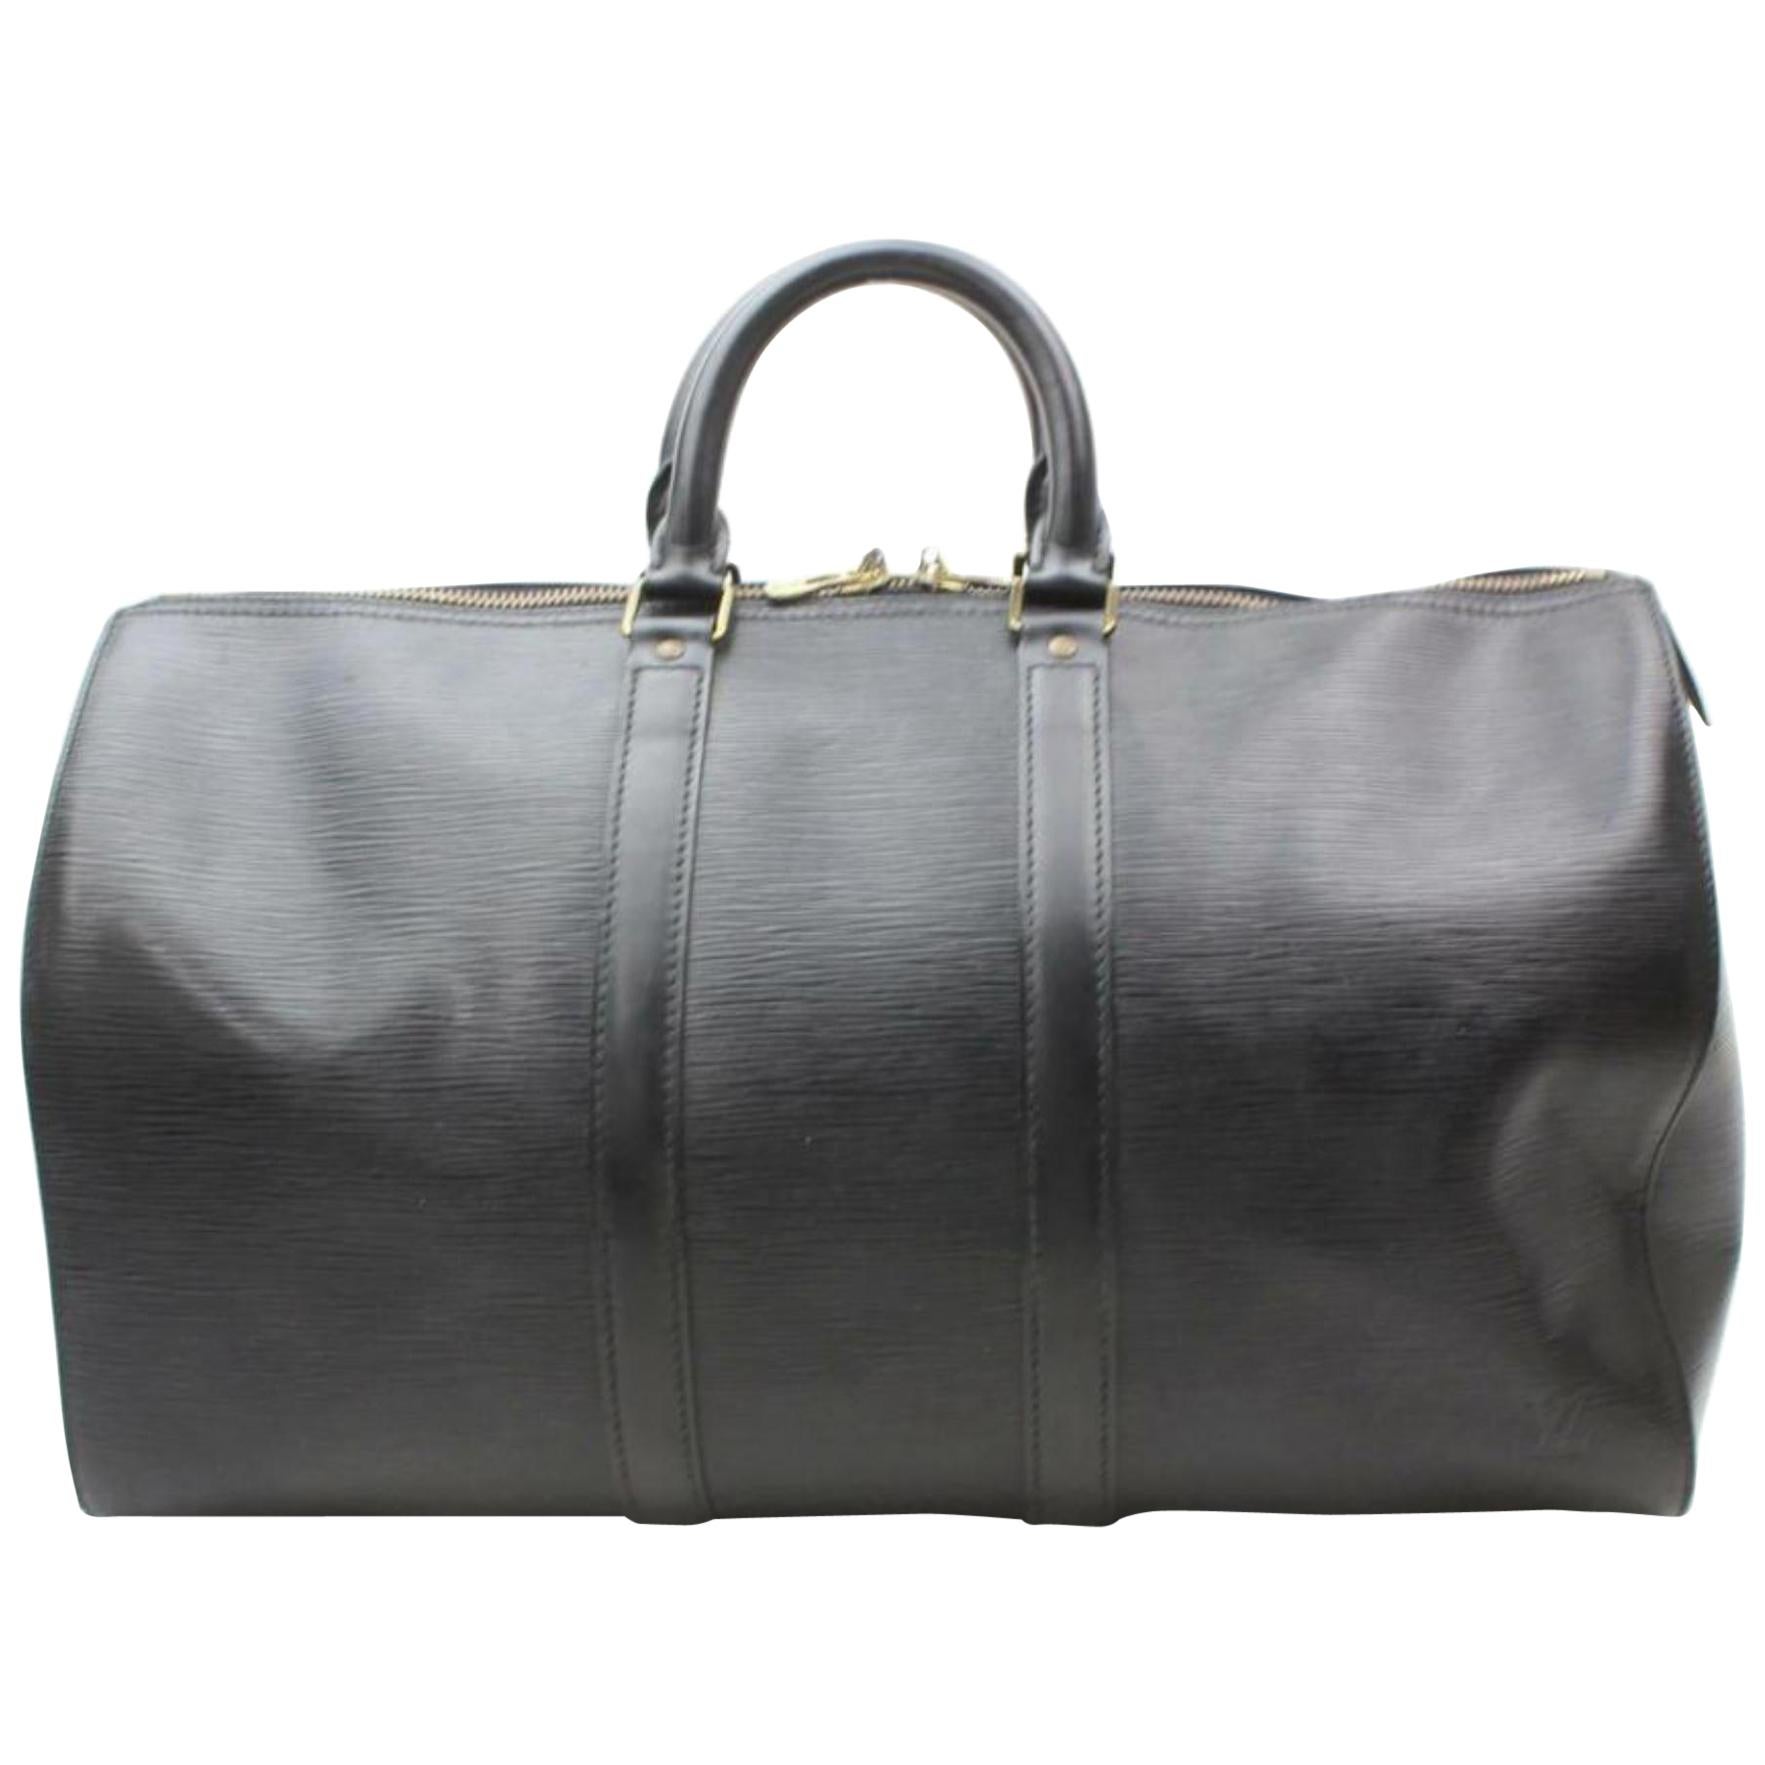 Louis Vuitton Keepall Duffle Noir 45 870140 Black Leather Weekend/Travel Bag For Sale